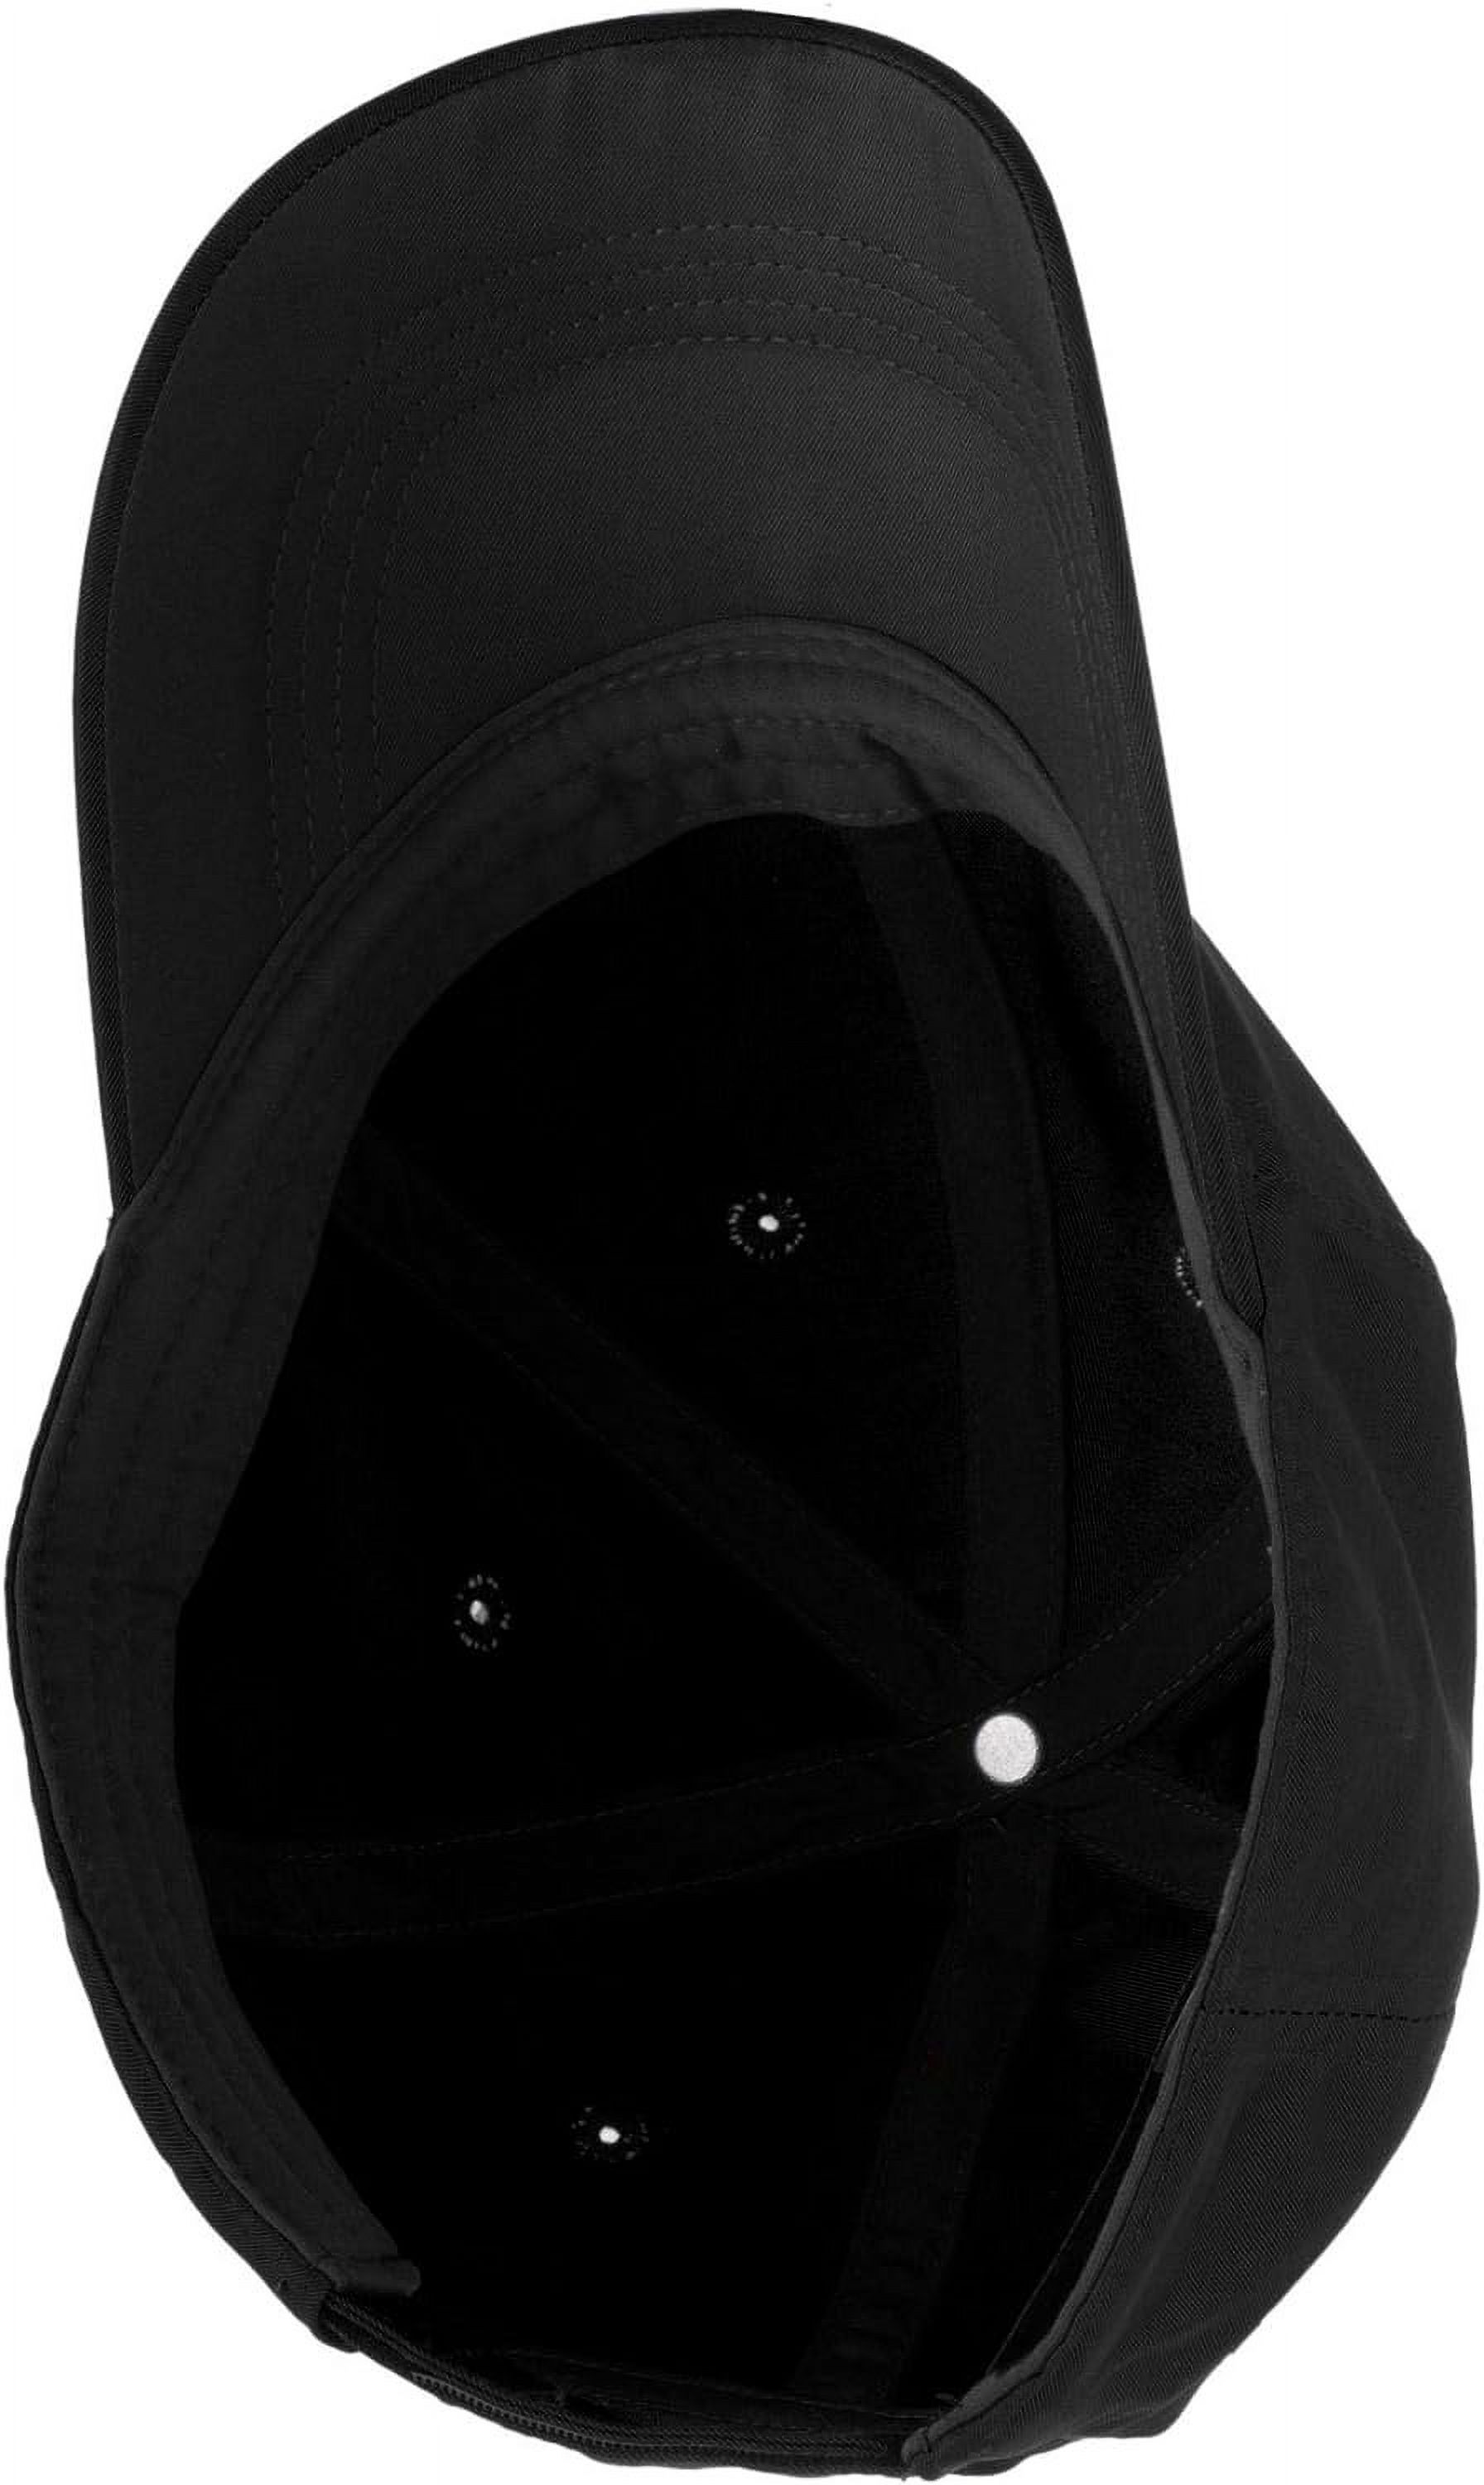 Nike Standard Golf Cap, Black, Adjustable - image 2 of 2